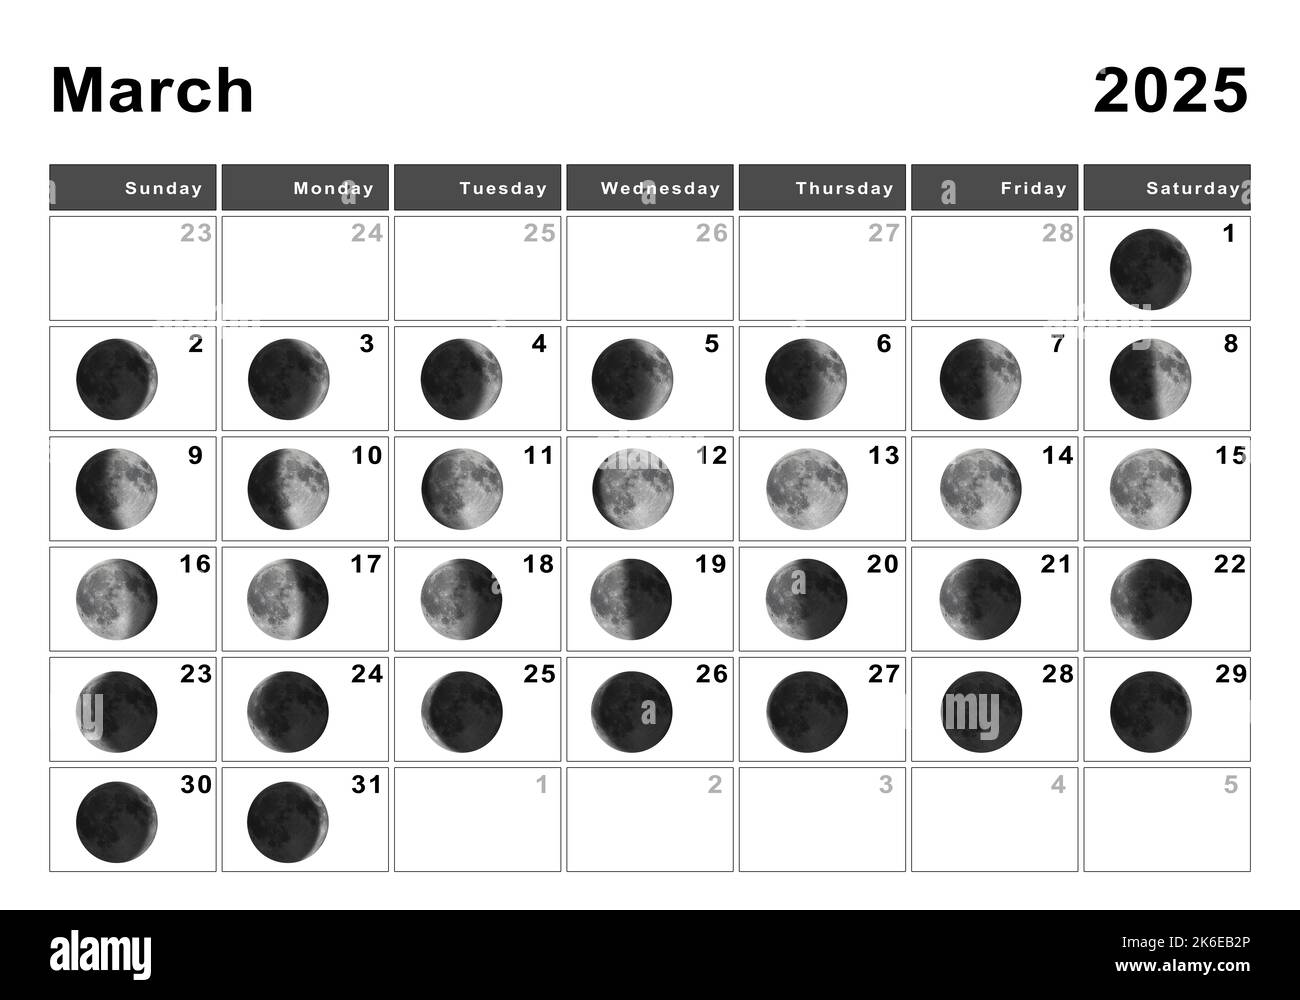 2025 calendar Cut Out Images Pictures - Alamy